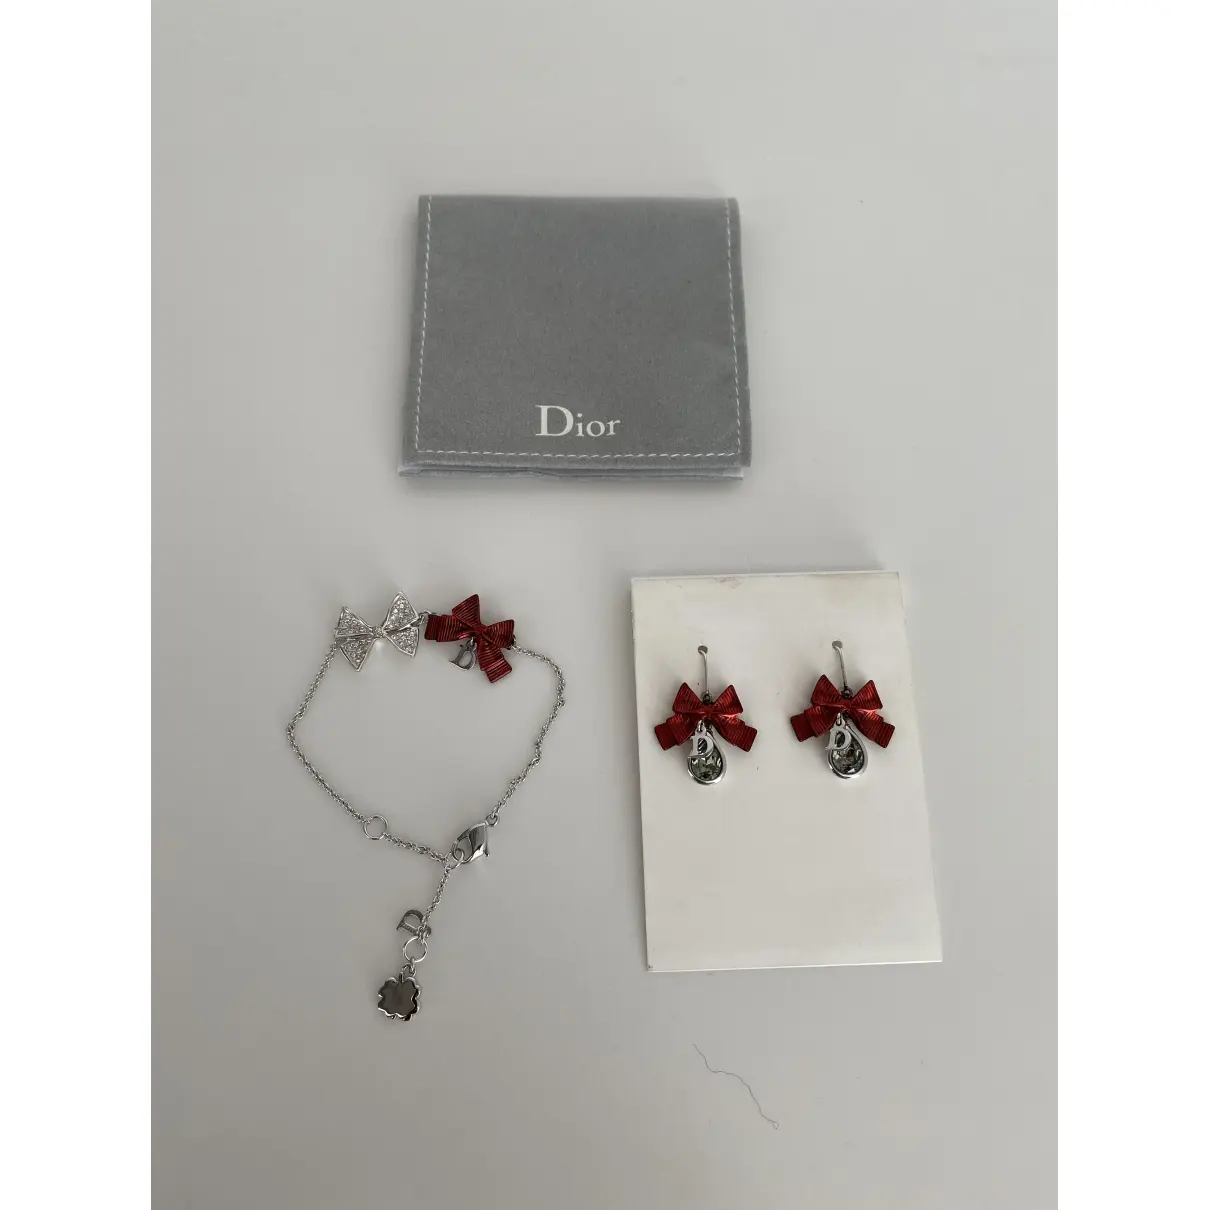 Dior Jewellery set for sale